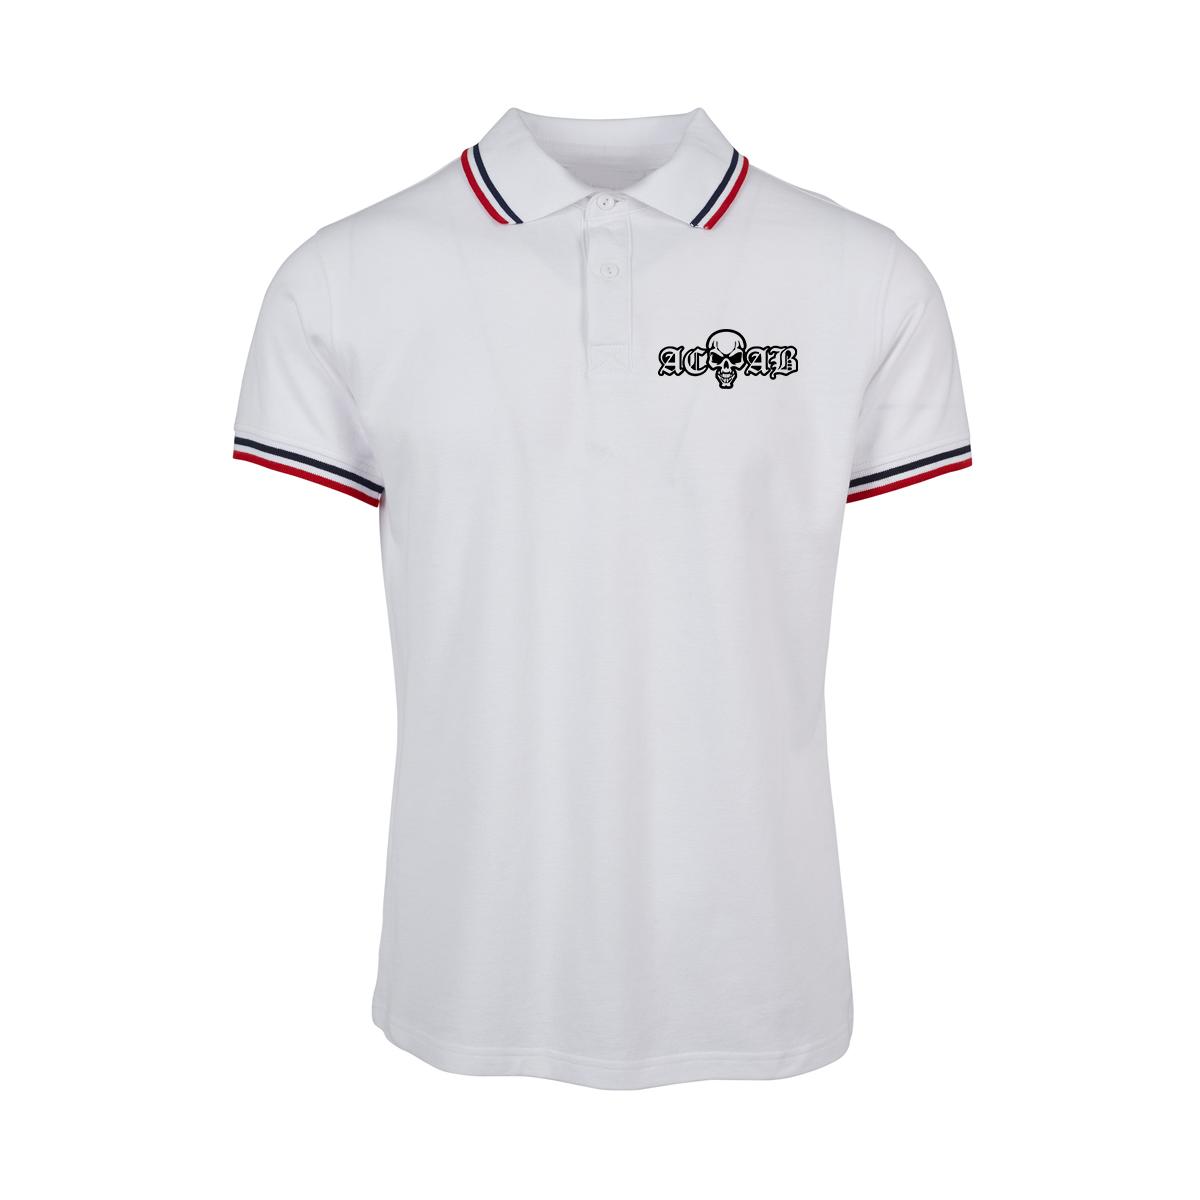 ACAB - Männer Polo Shirt - Skull - schwarz-weiß-rot